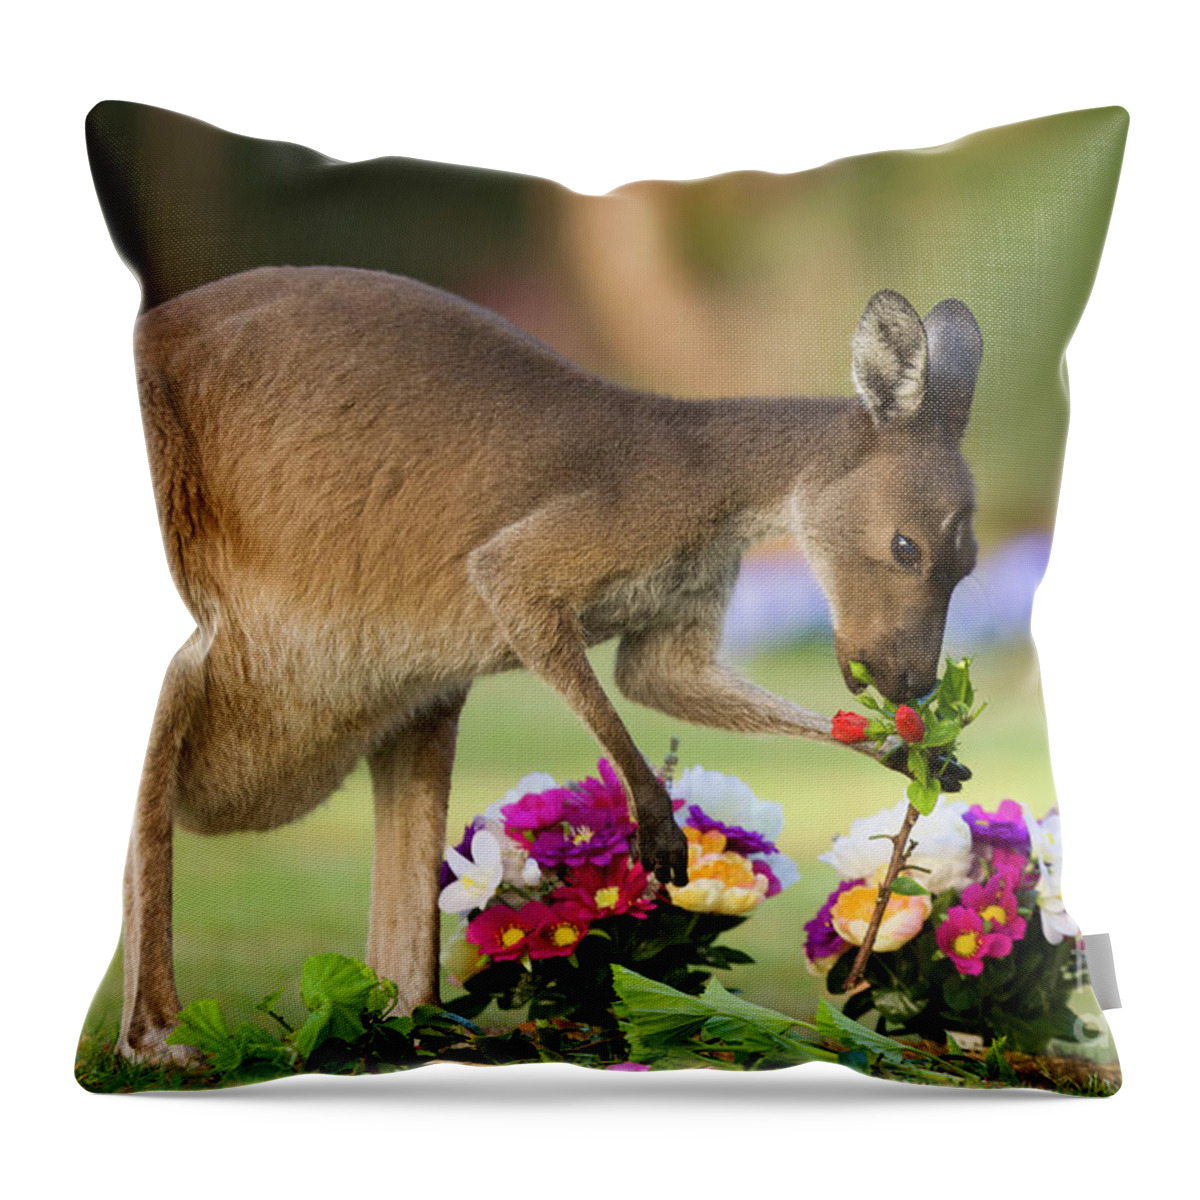 00451879 Throw Pillow featuring the photograph Grey Kangaroo Eating Graveyard Flowers by Yva Momatiuk and John Eastcott